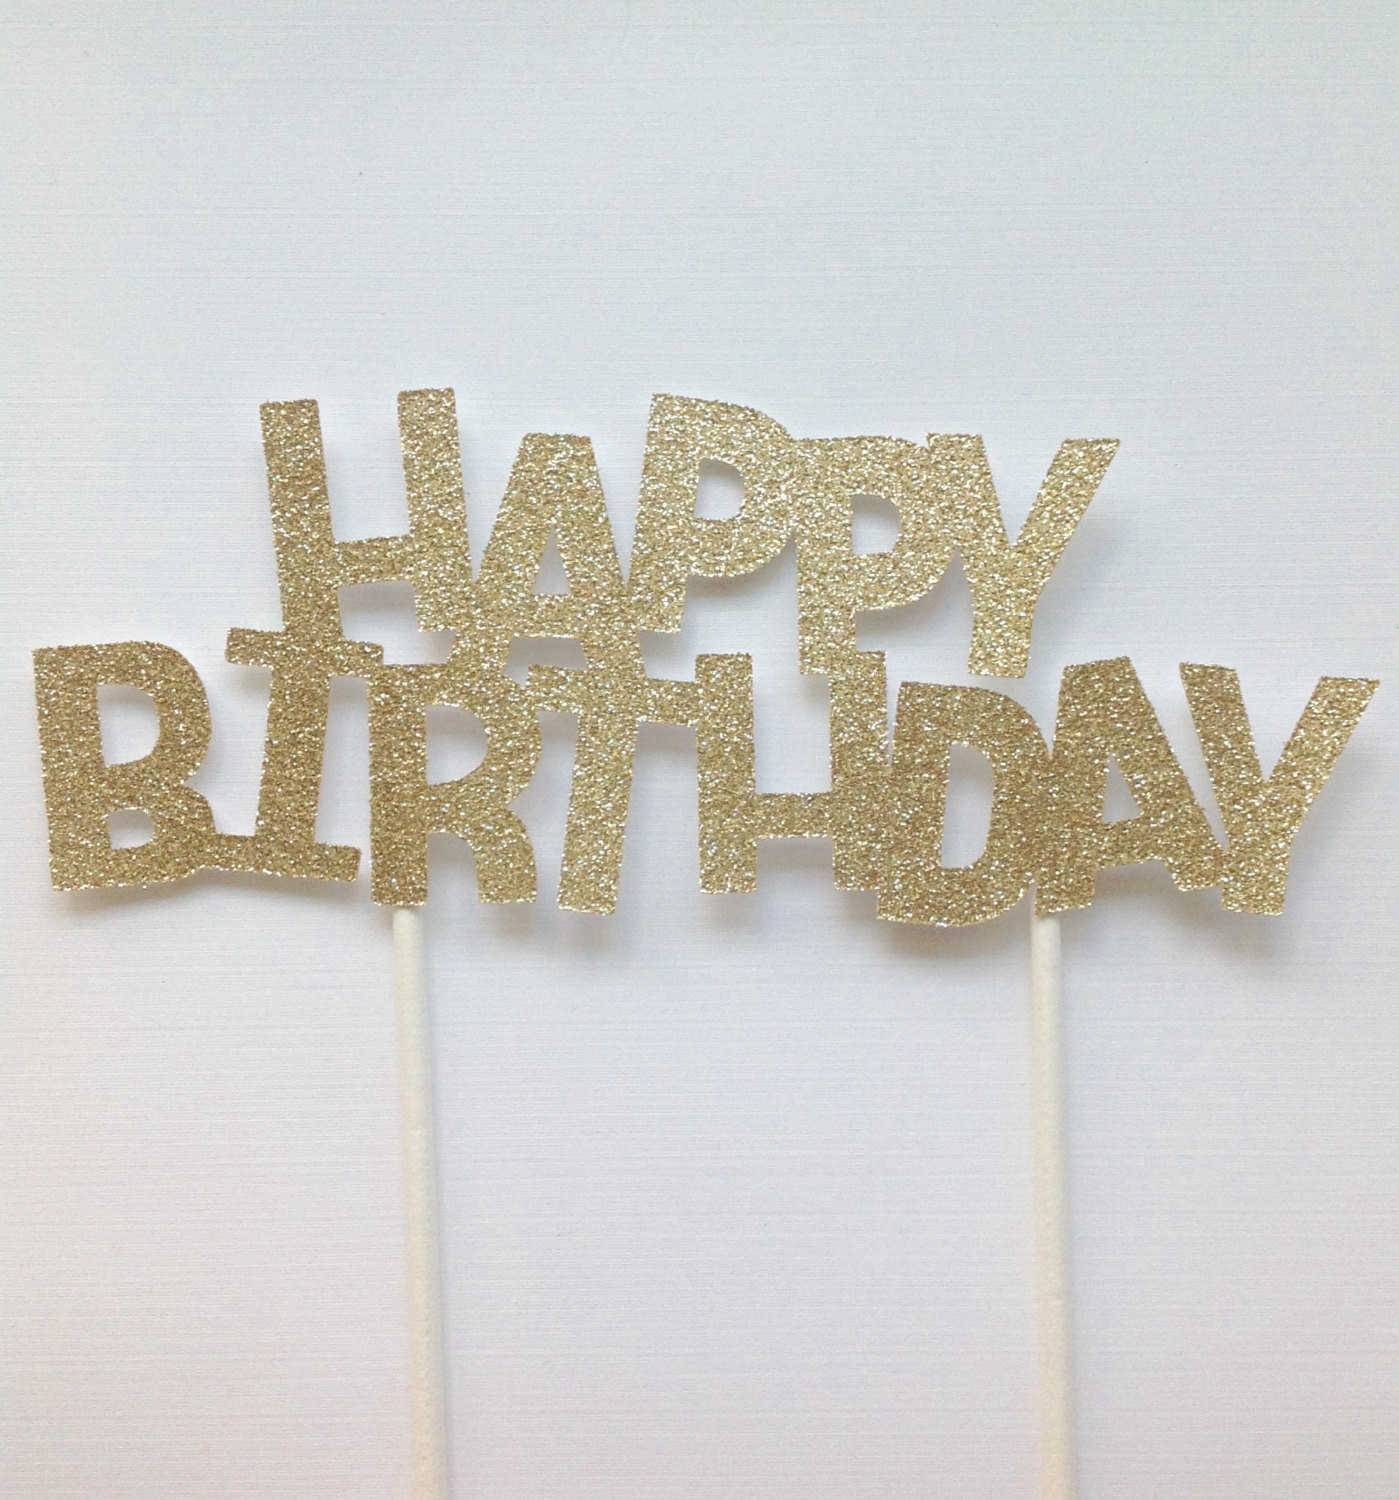 Best ideas about Gold Happy Birthday Cake Topper
. Save or Pin Gold Happy Birthday Cake Topper Gold Glitter Birthday Cake Now.